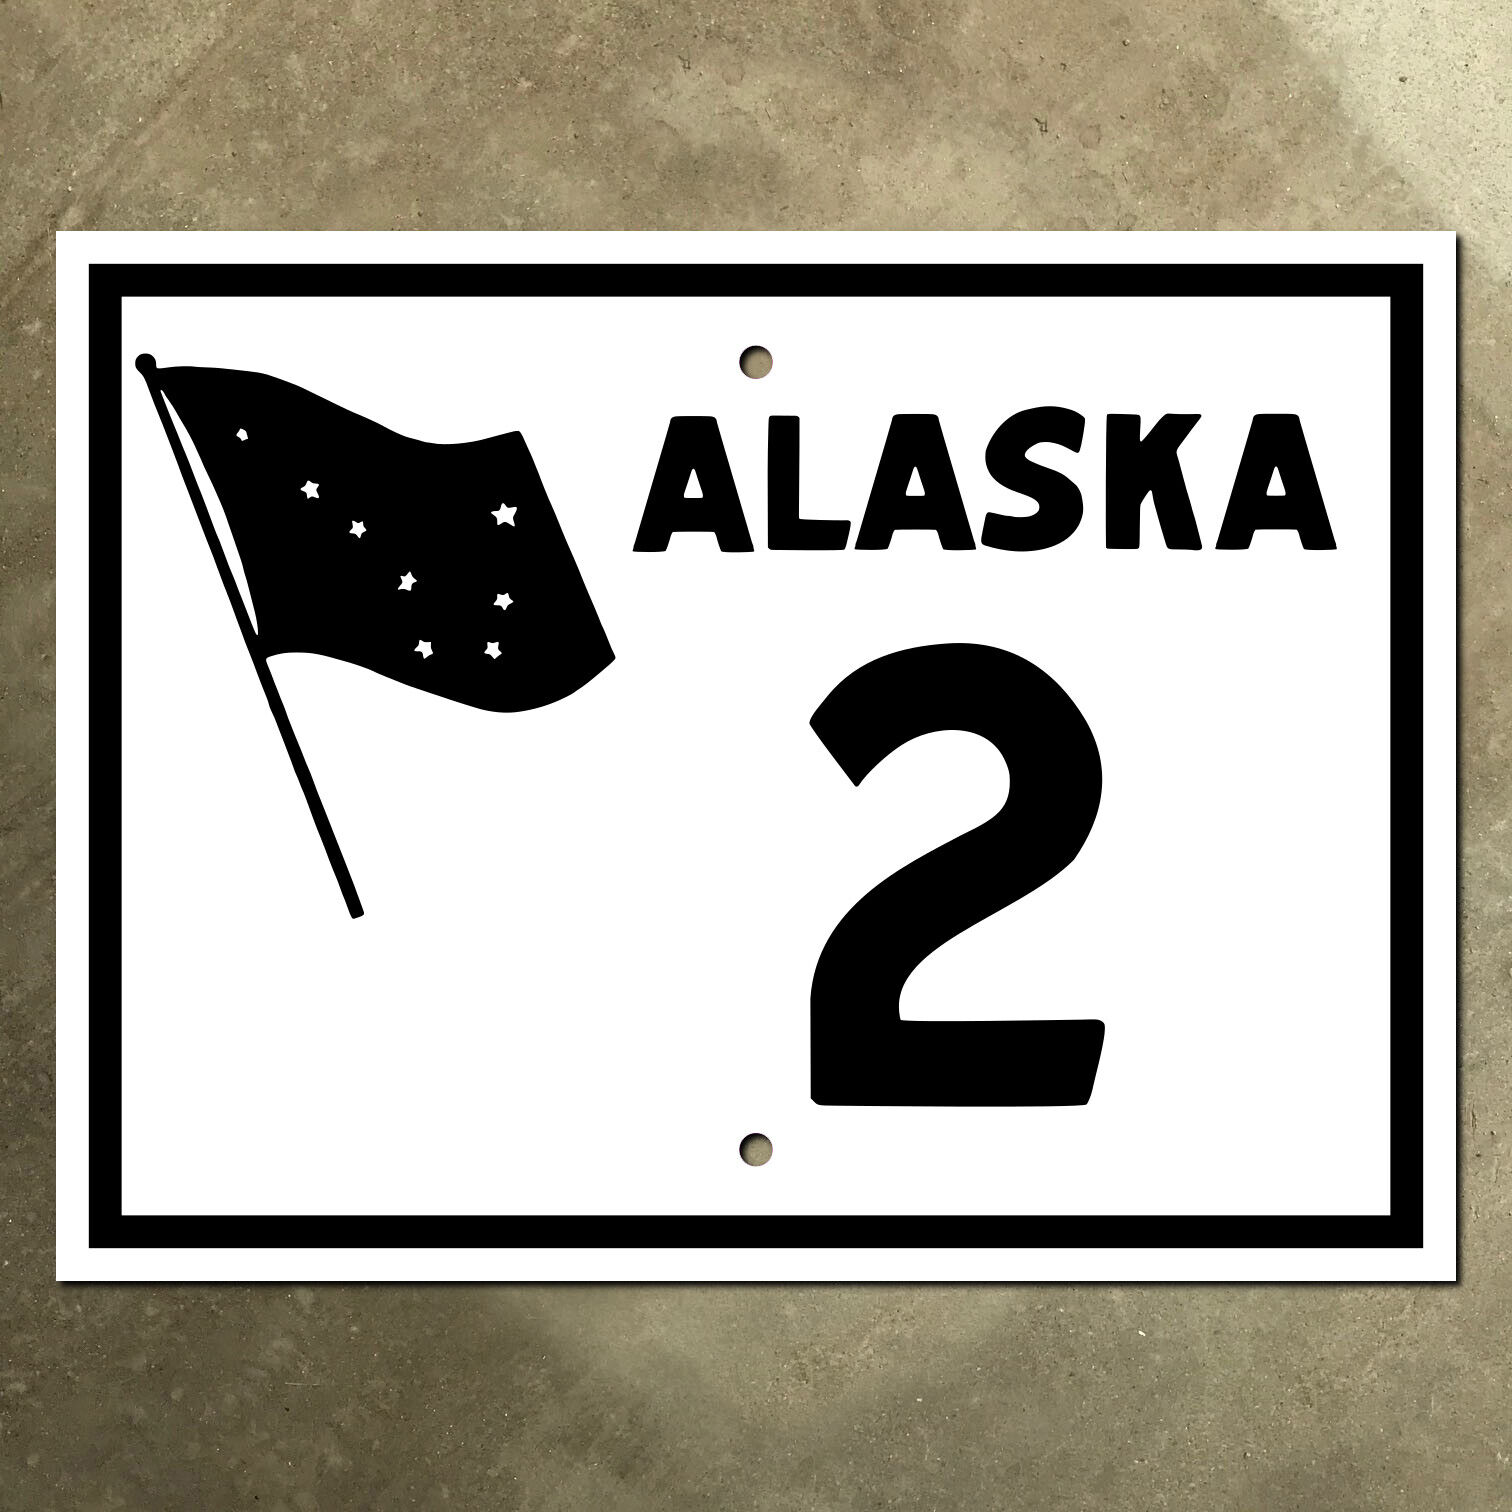 Alaska state route 2 highway marker road sign Alcan Fairbanks 16x12 Delta 1955